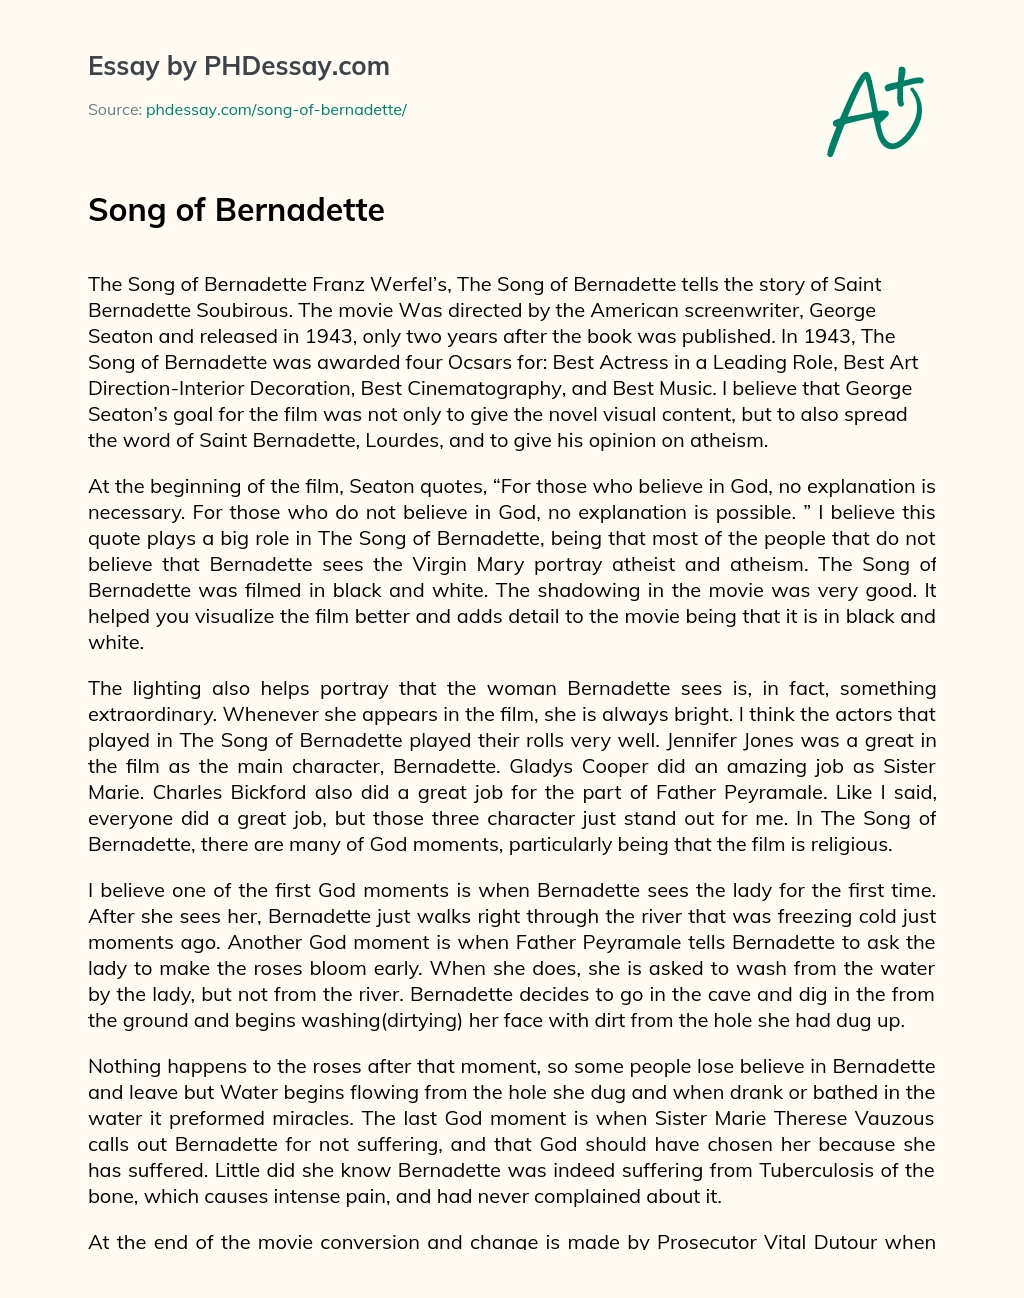 Song of Bernadette essay